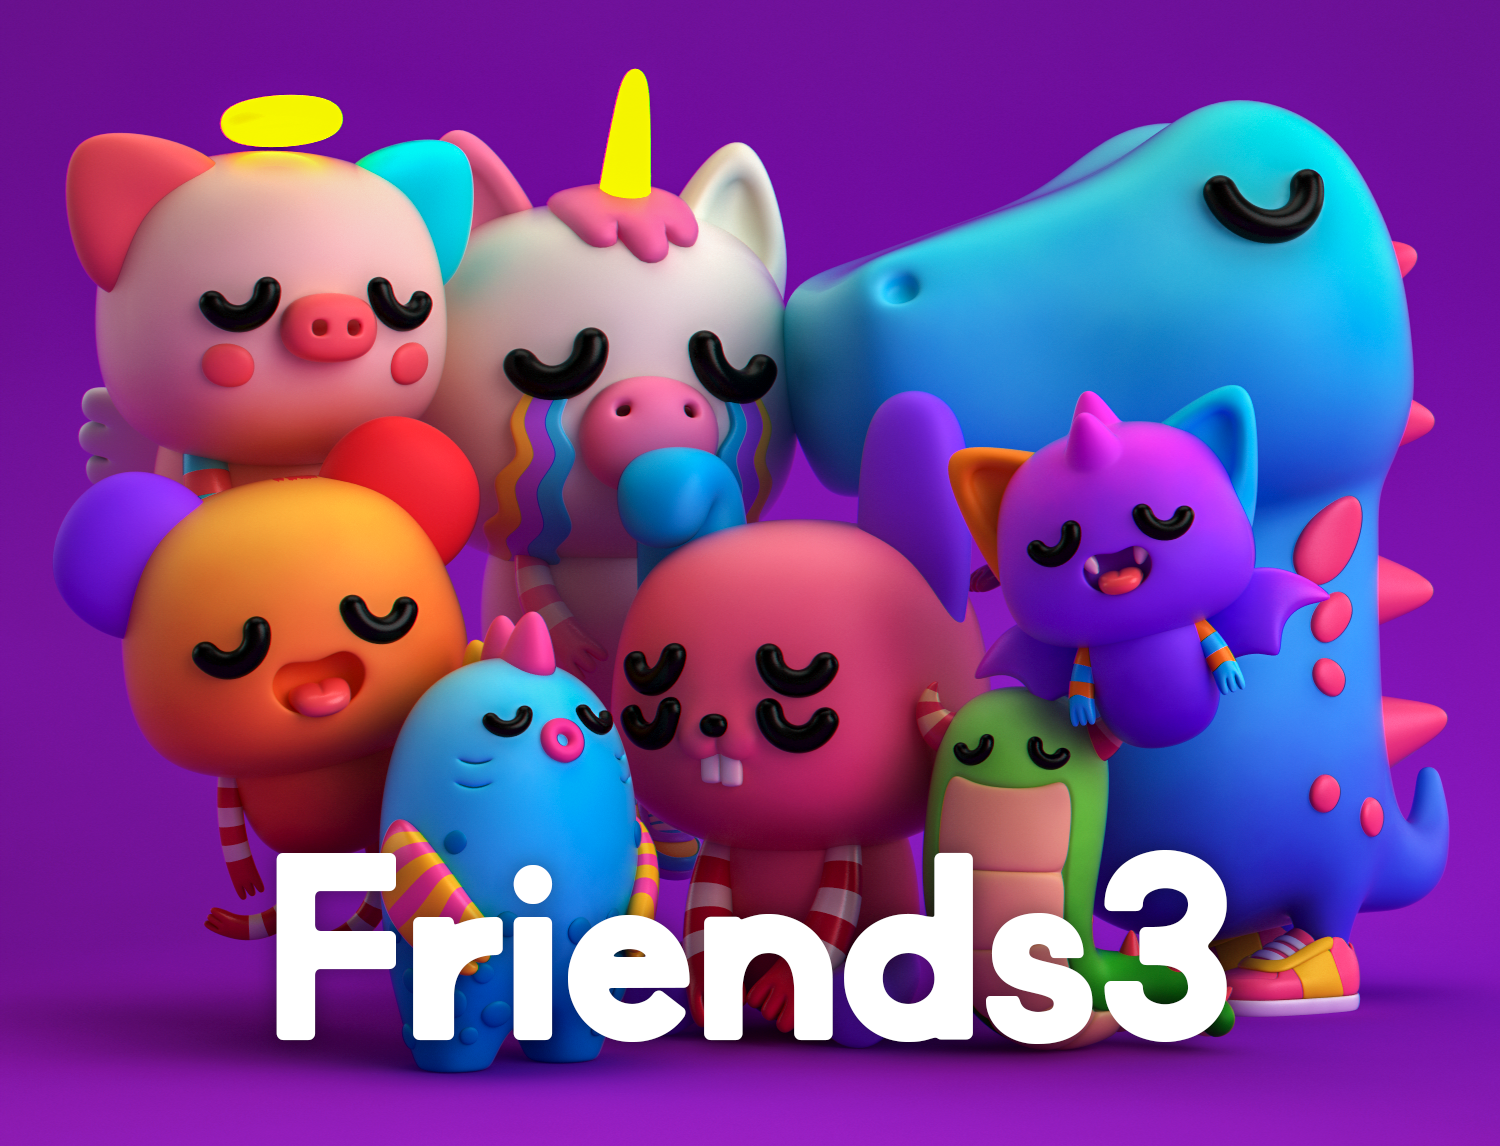 Tadd's Friends 3 on Behance1c3a3776059003.5c5e21201e2a8.png